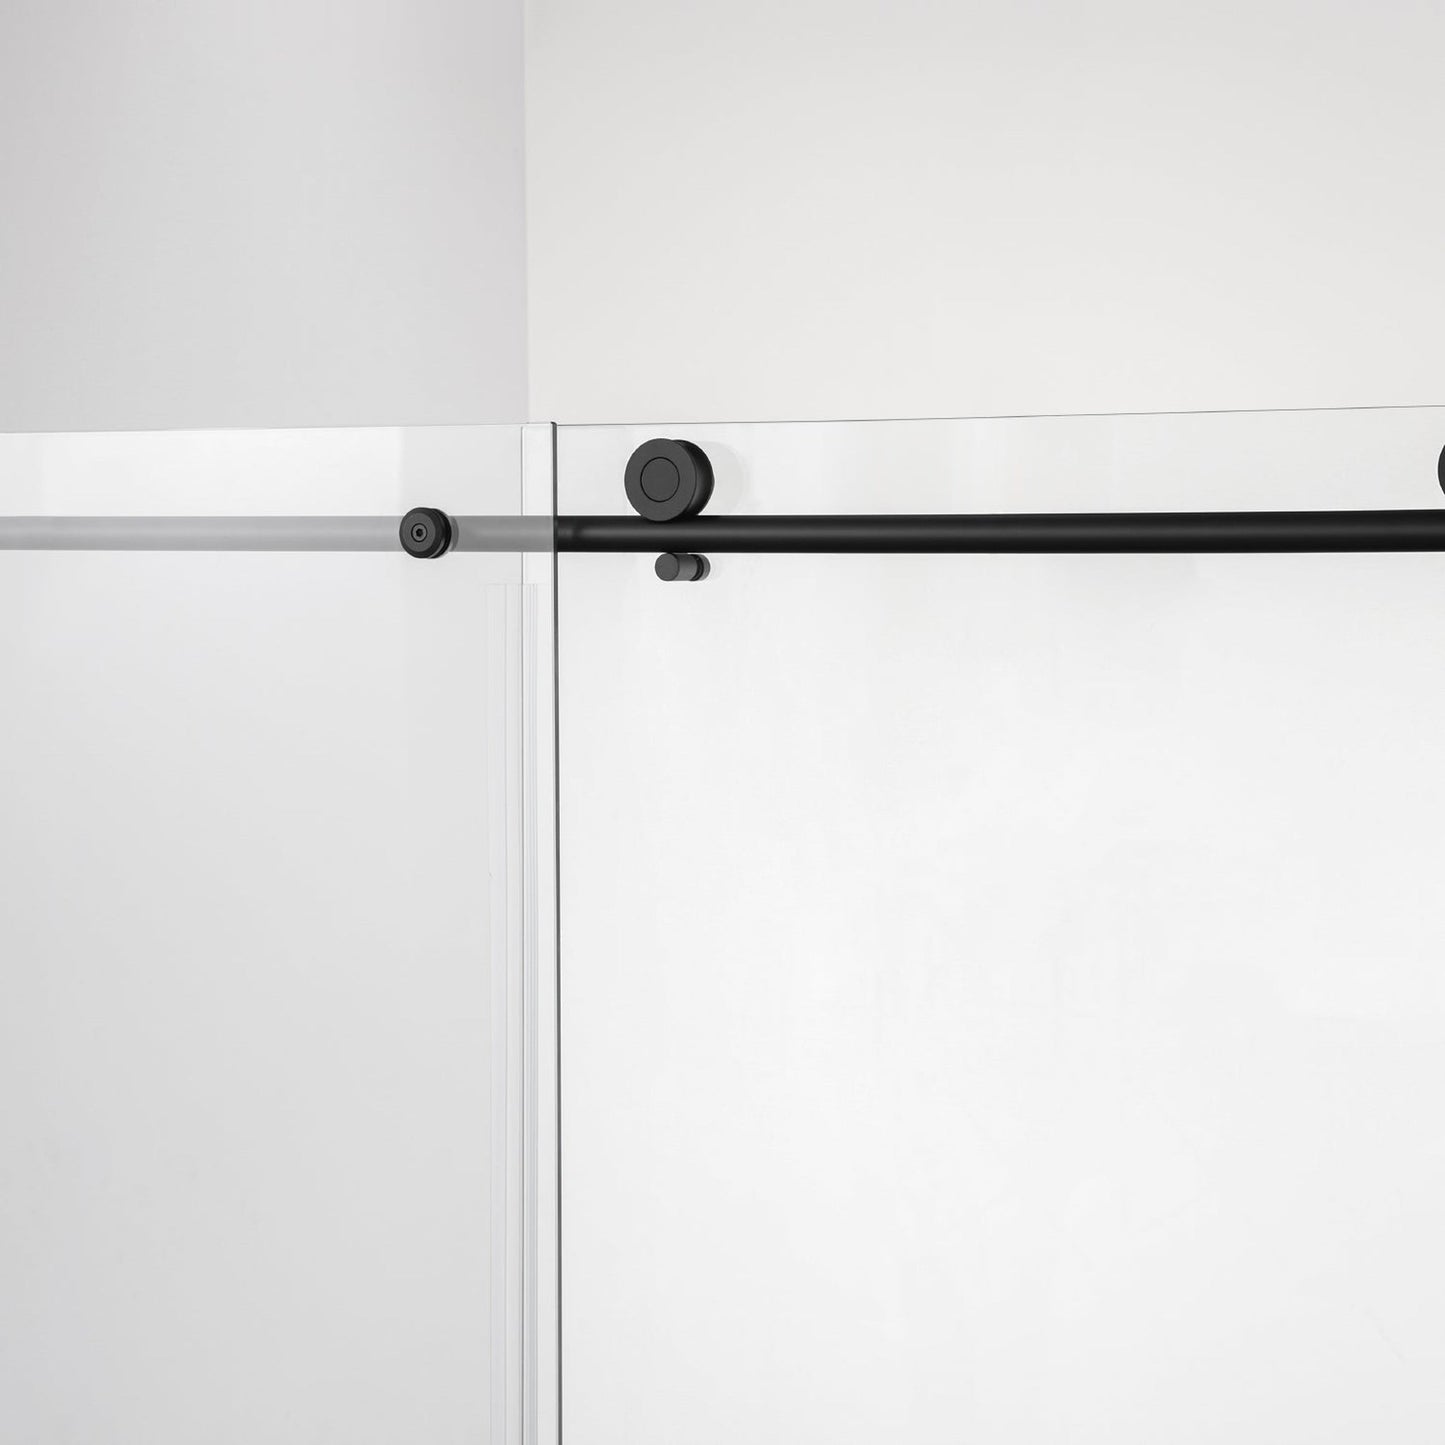 Vinnova Villena 60" x 58" Matte Black Single Sliding Frameless Glass Tub Door